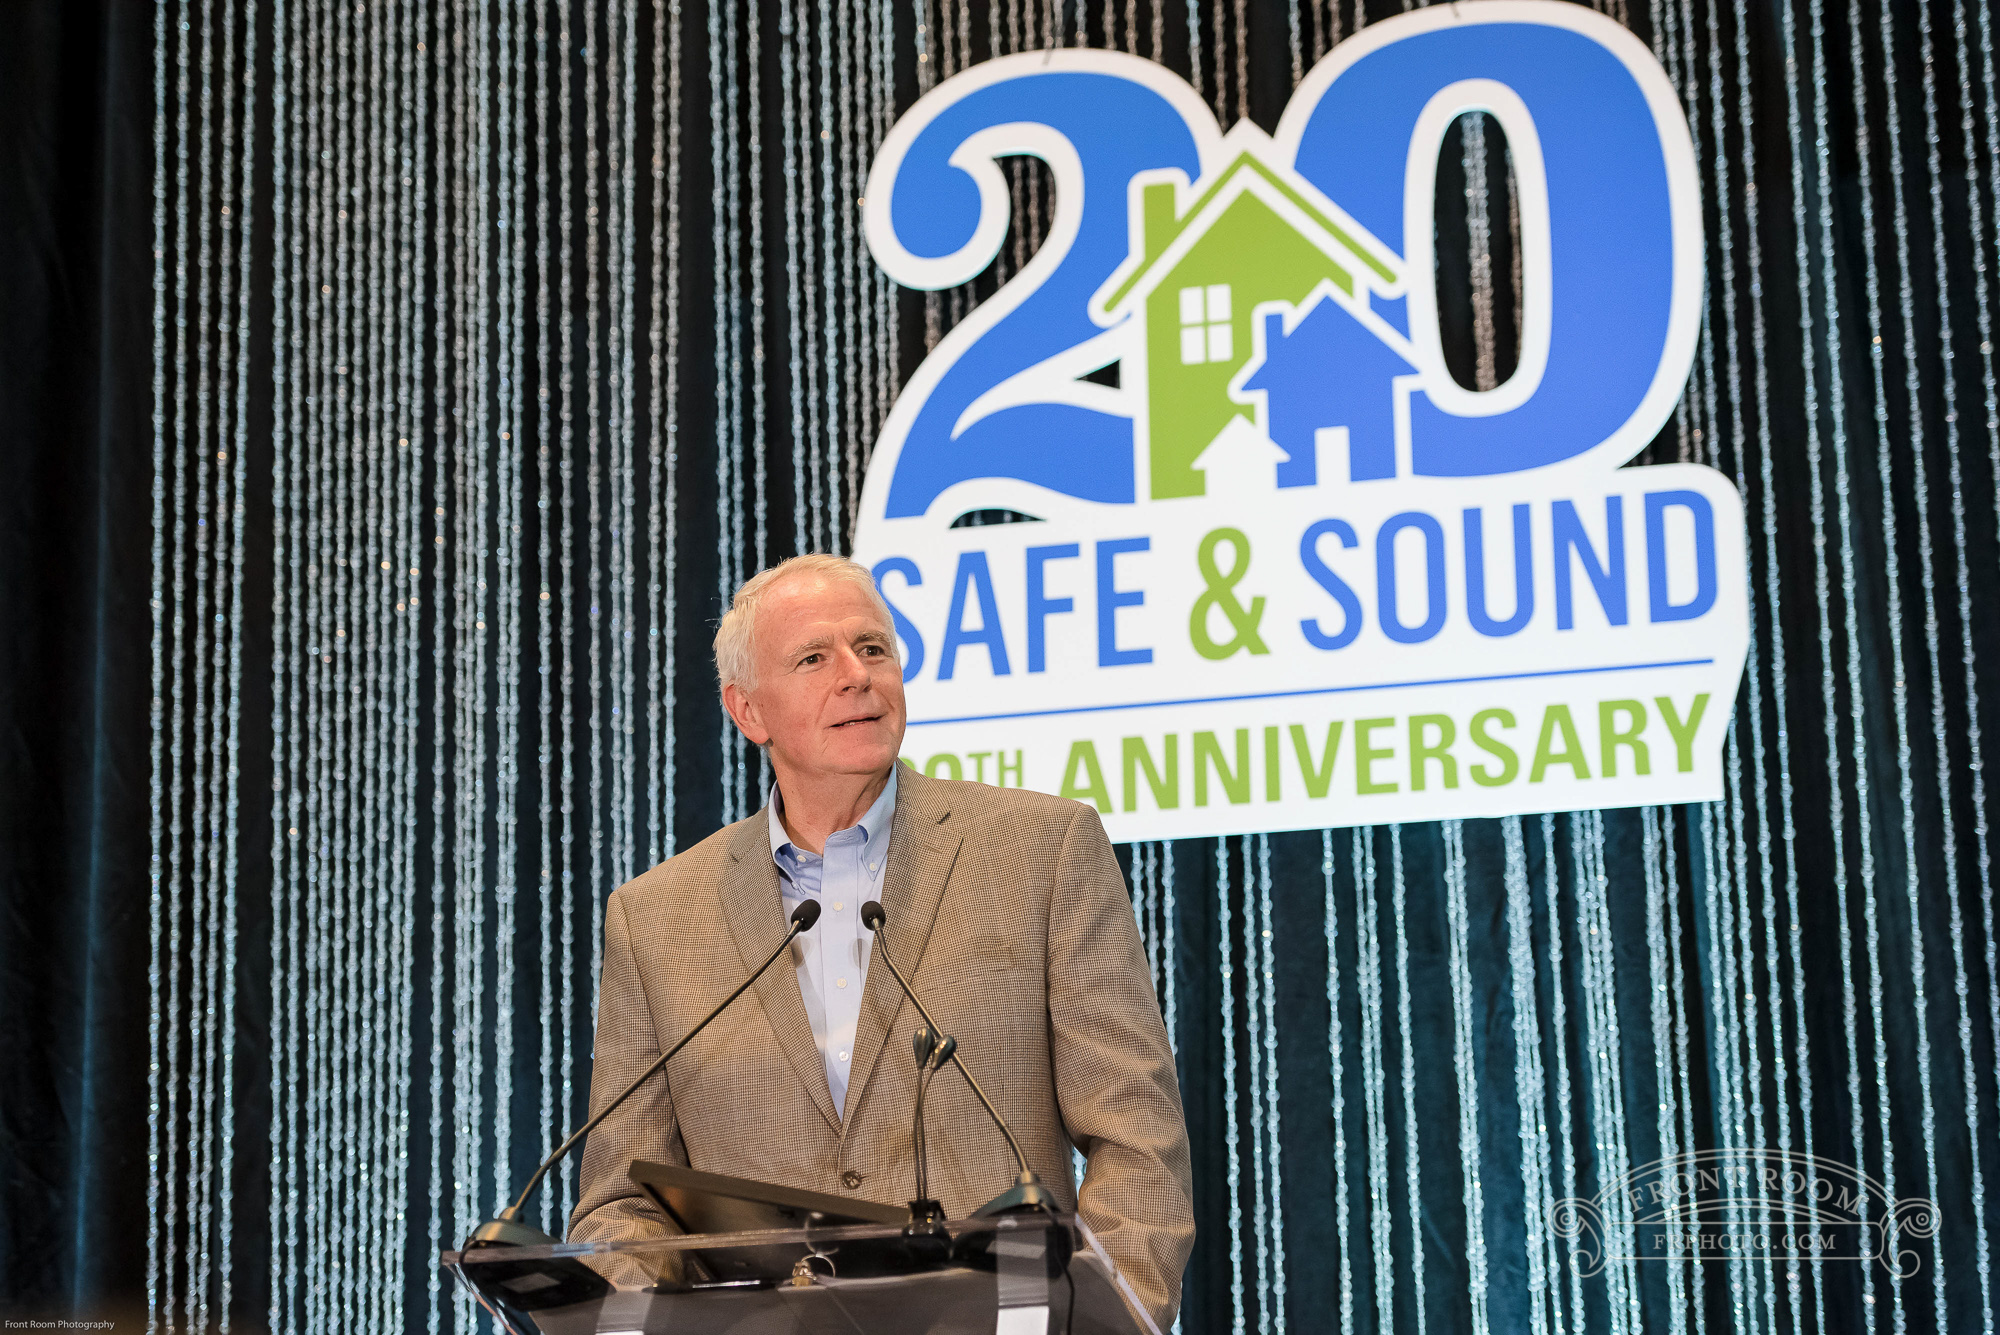 Safe & Sound, Safe & Sound 25th anniversary, front room studios, commercial event photographer, mayor tom barrett